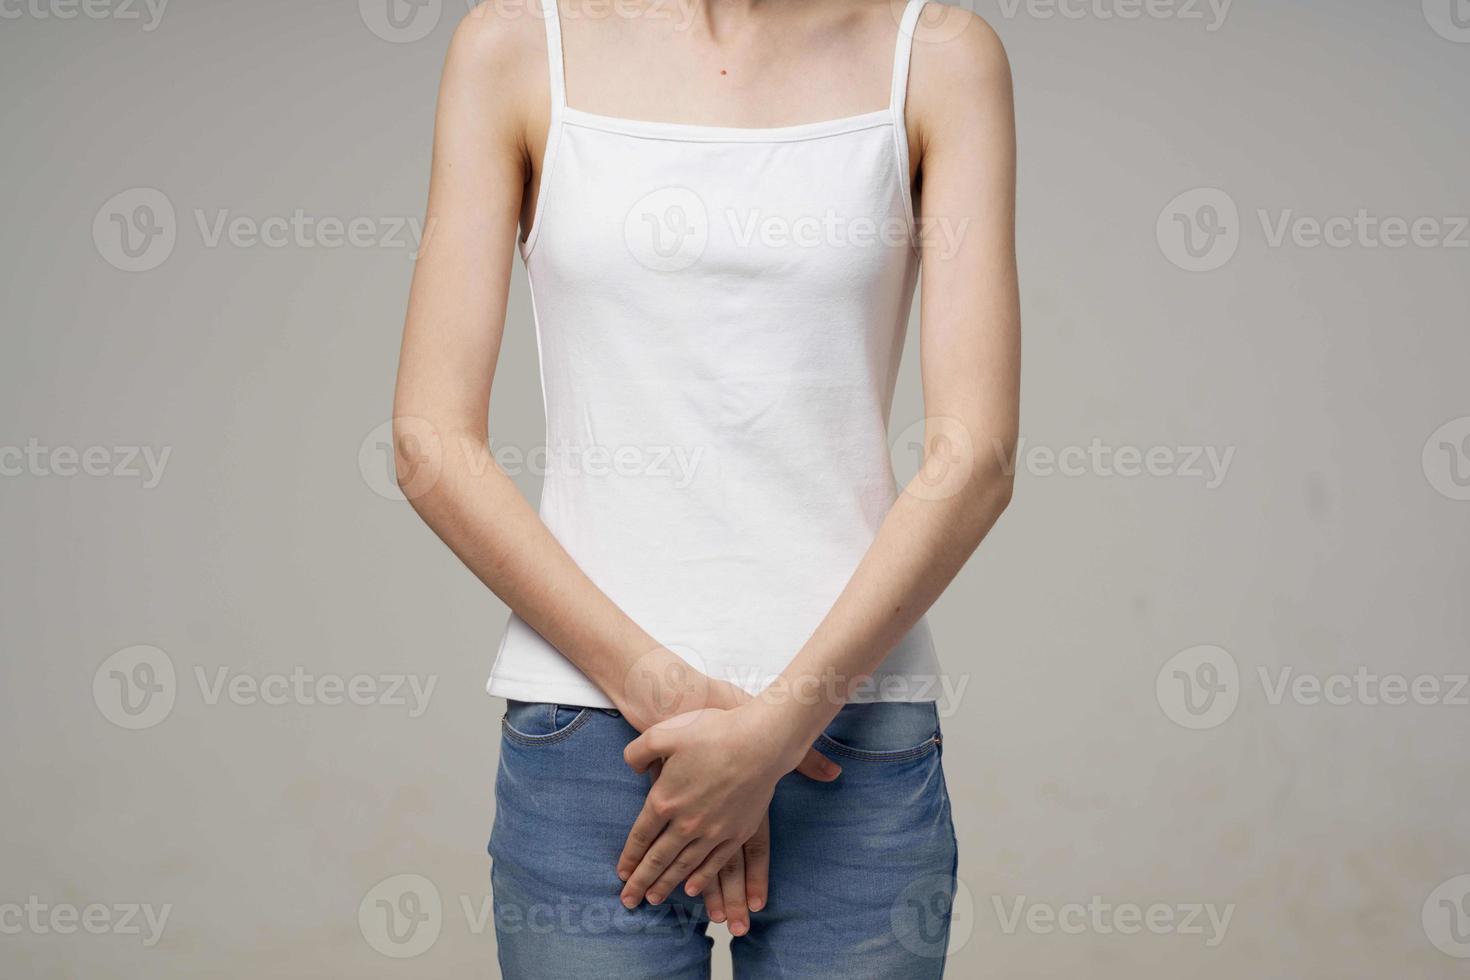 sick woman groin pain intimate illness gynecology light background photo